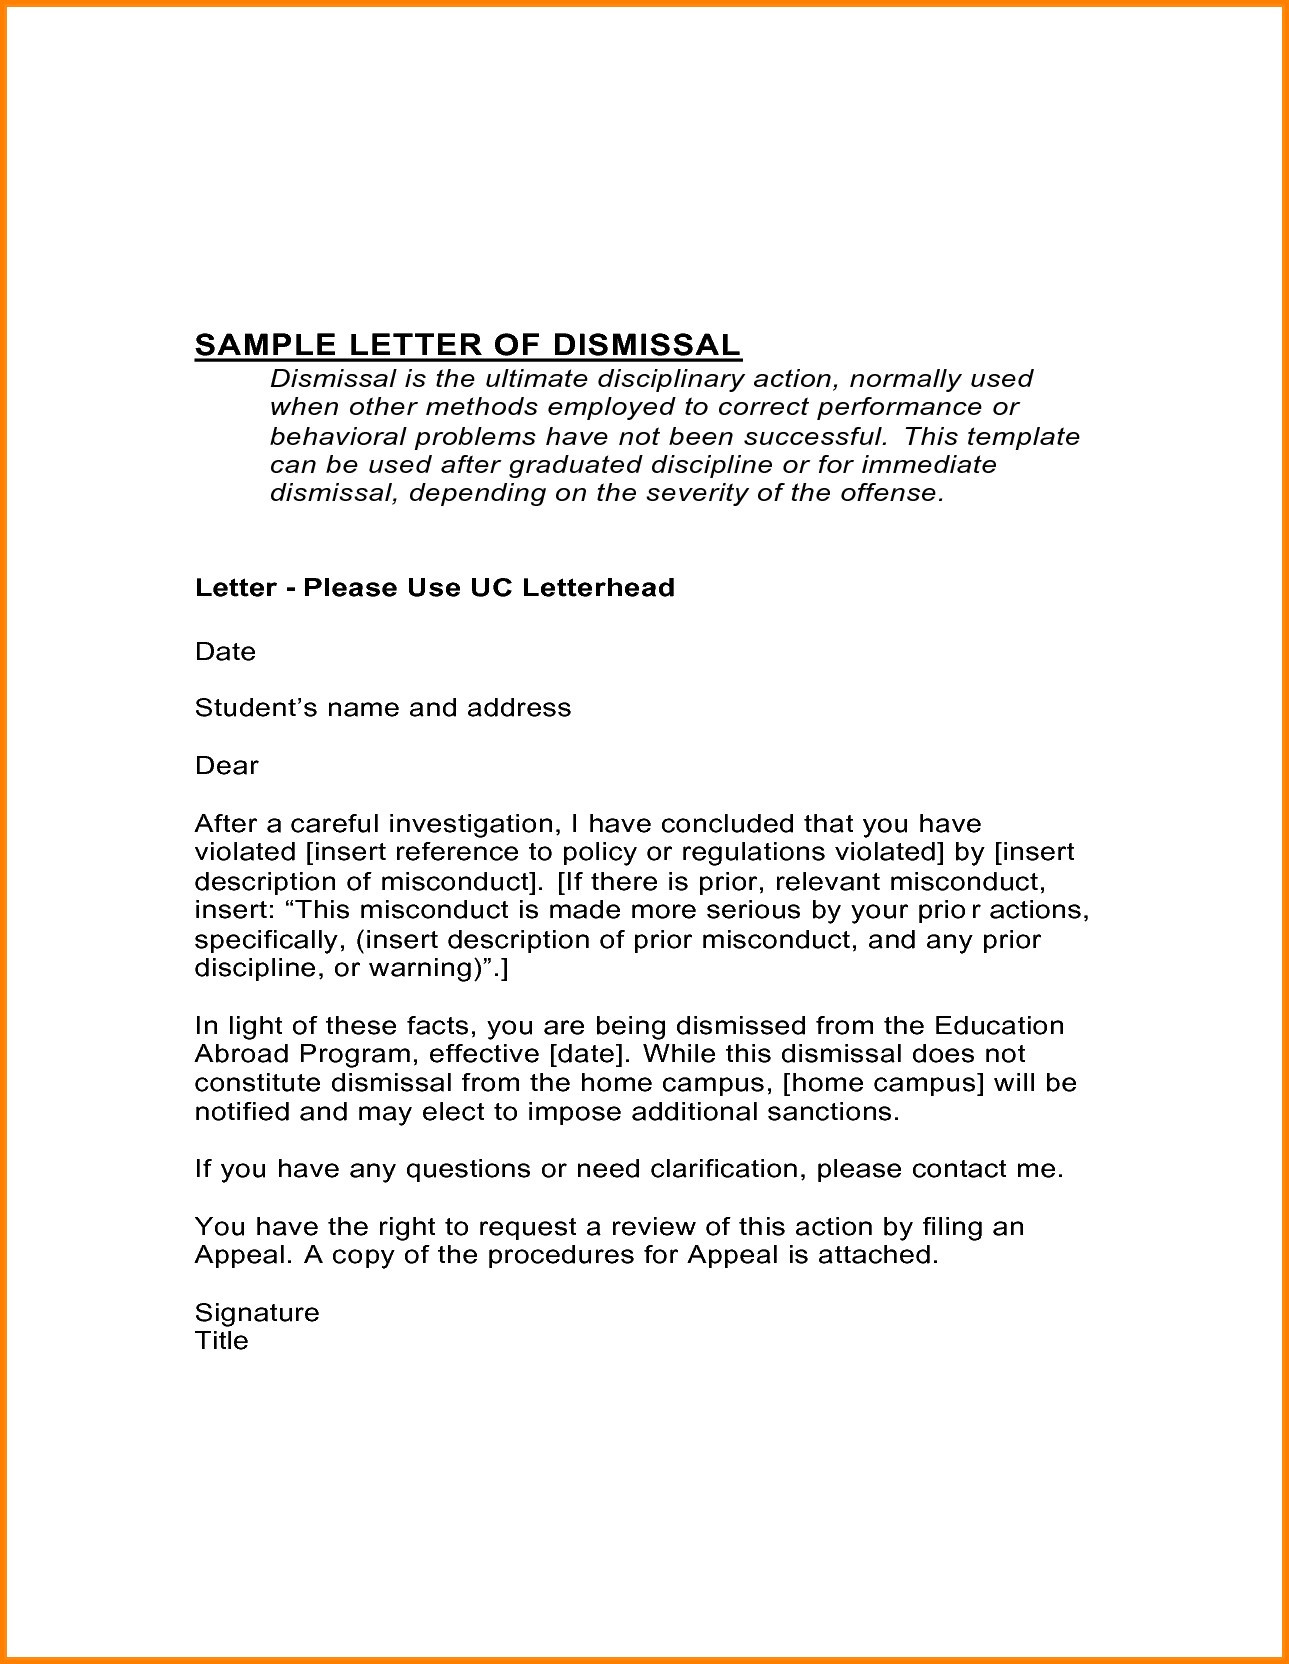 probation letter termination sample dismissal appeal template dental patient suspension academic college behavior university format against employer write example samples